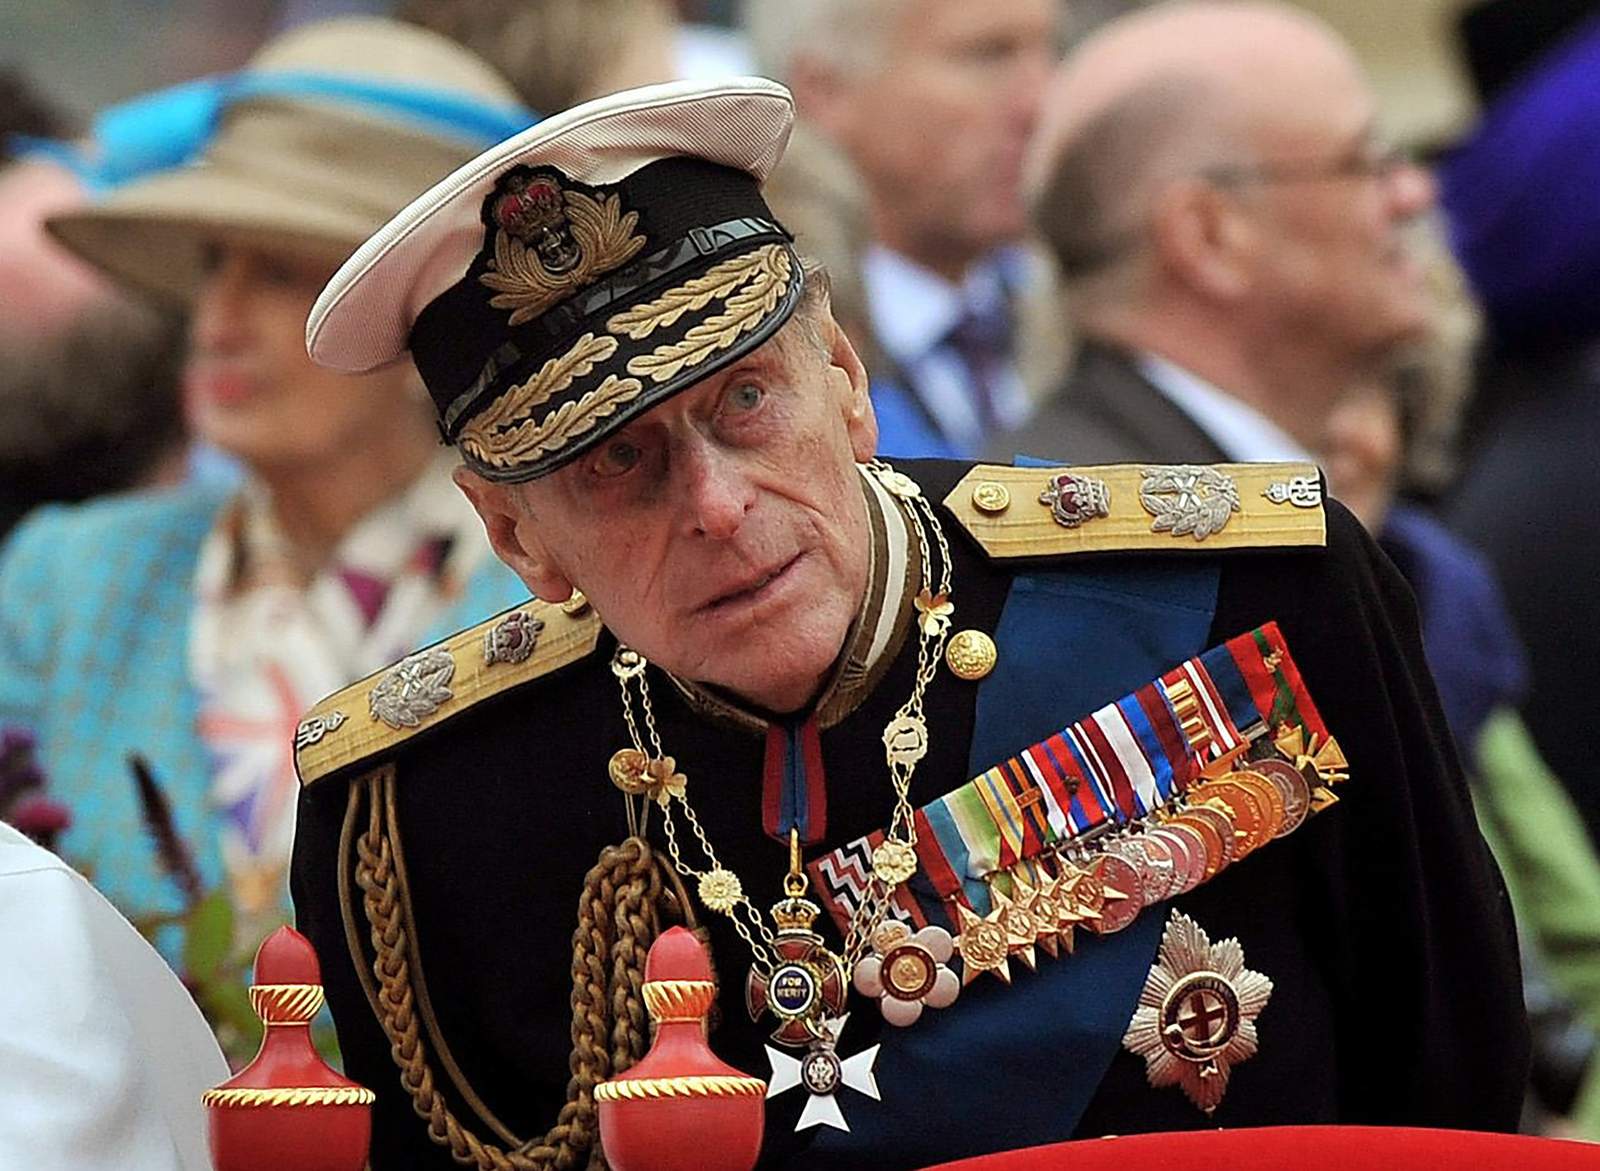 Prince Philip, Queen Elizabeth II’s husband, dies at 99